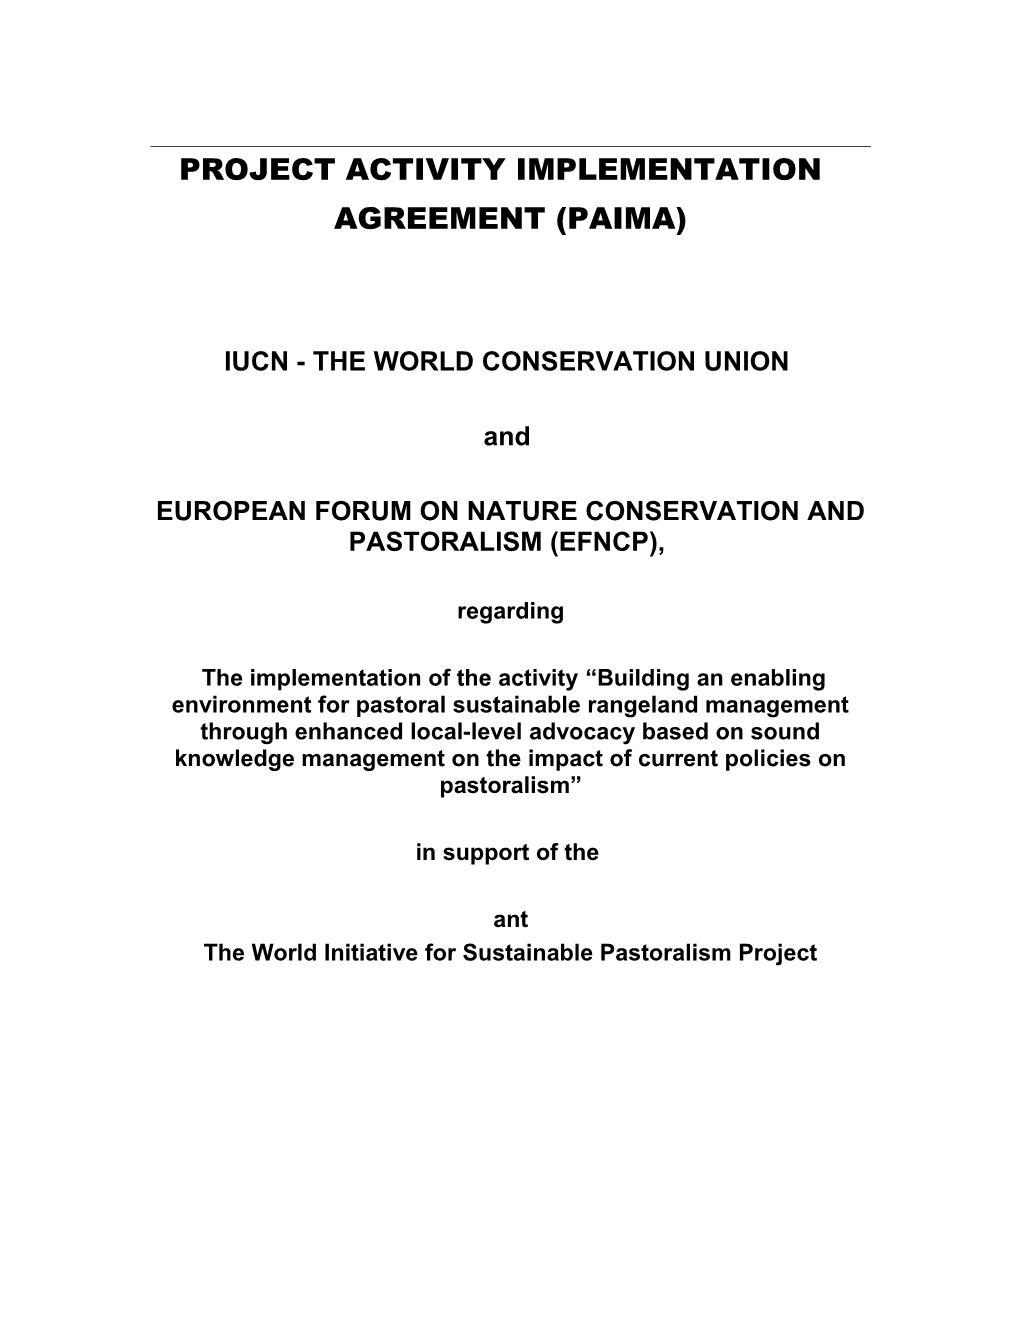 Memorandum of Project Implementation